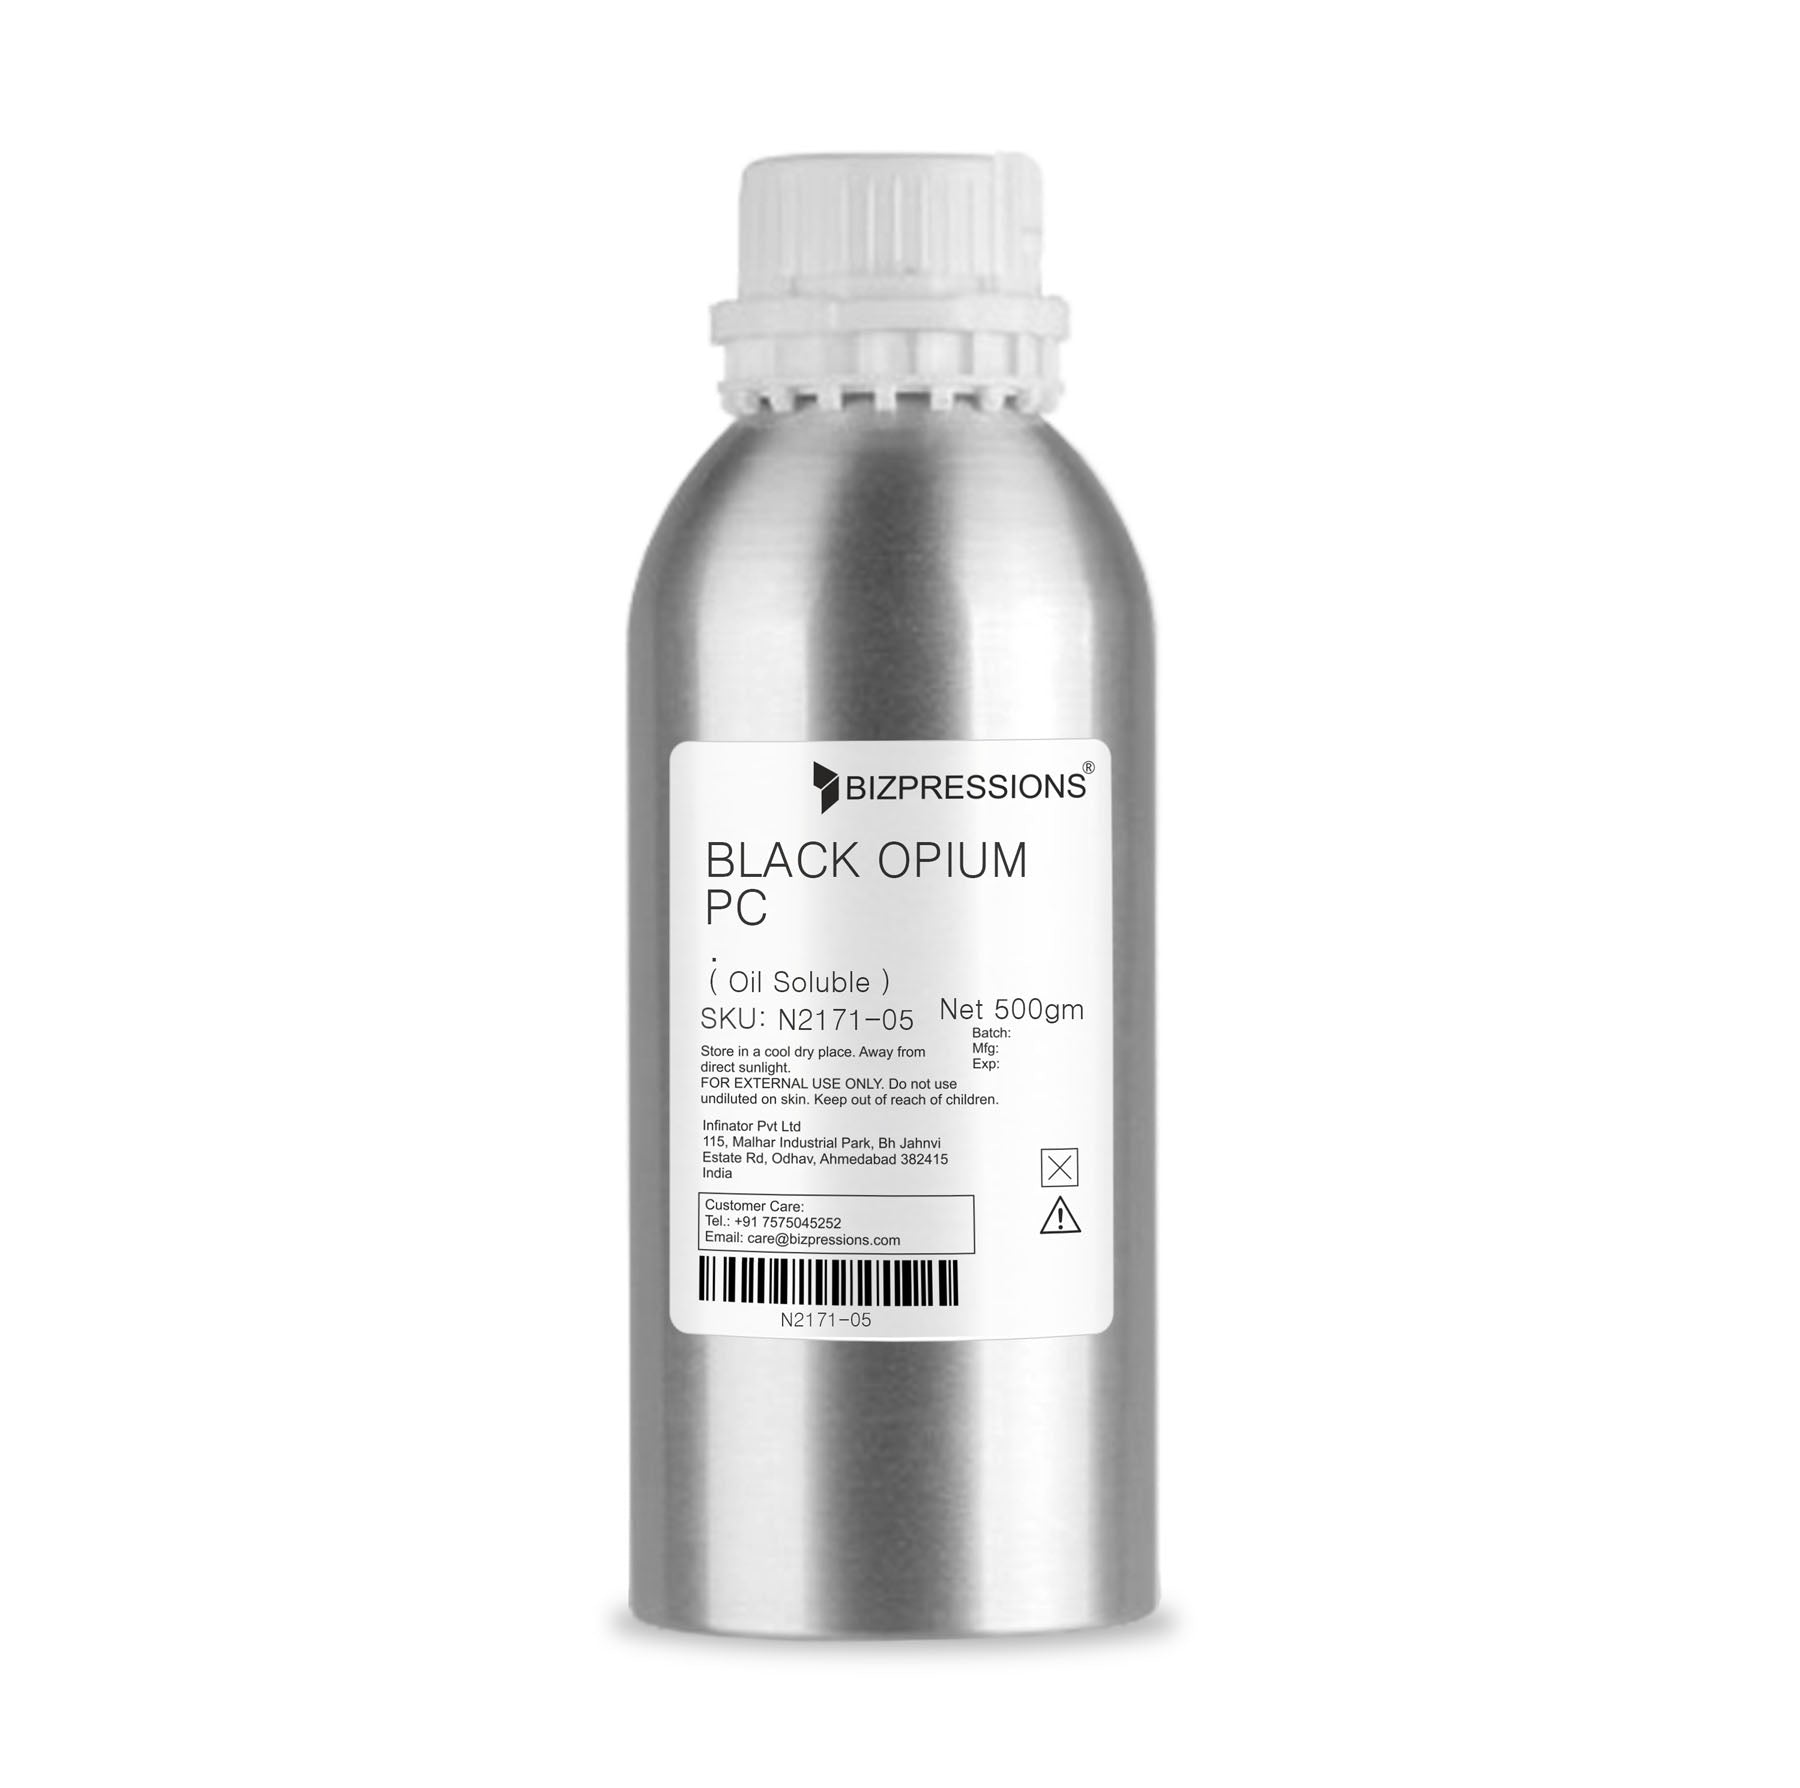 BLACK OPIUM PC - Fragrance ( Oil Soluble ) - 500 gm